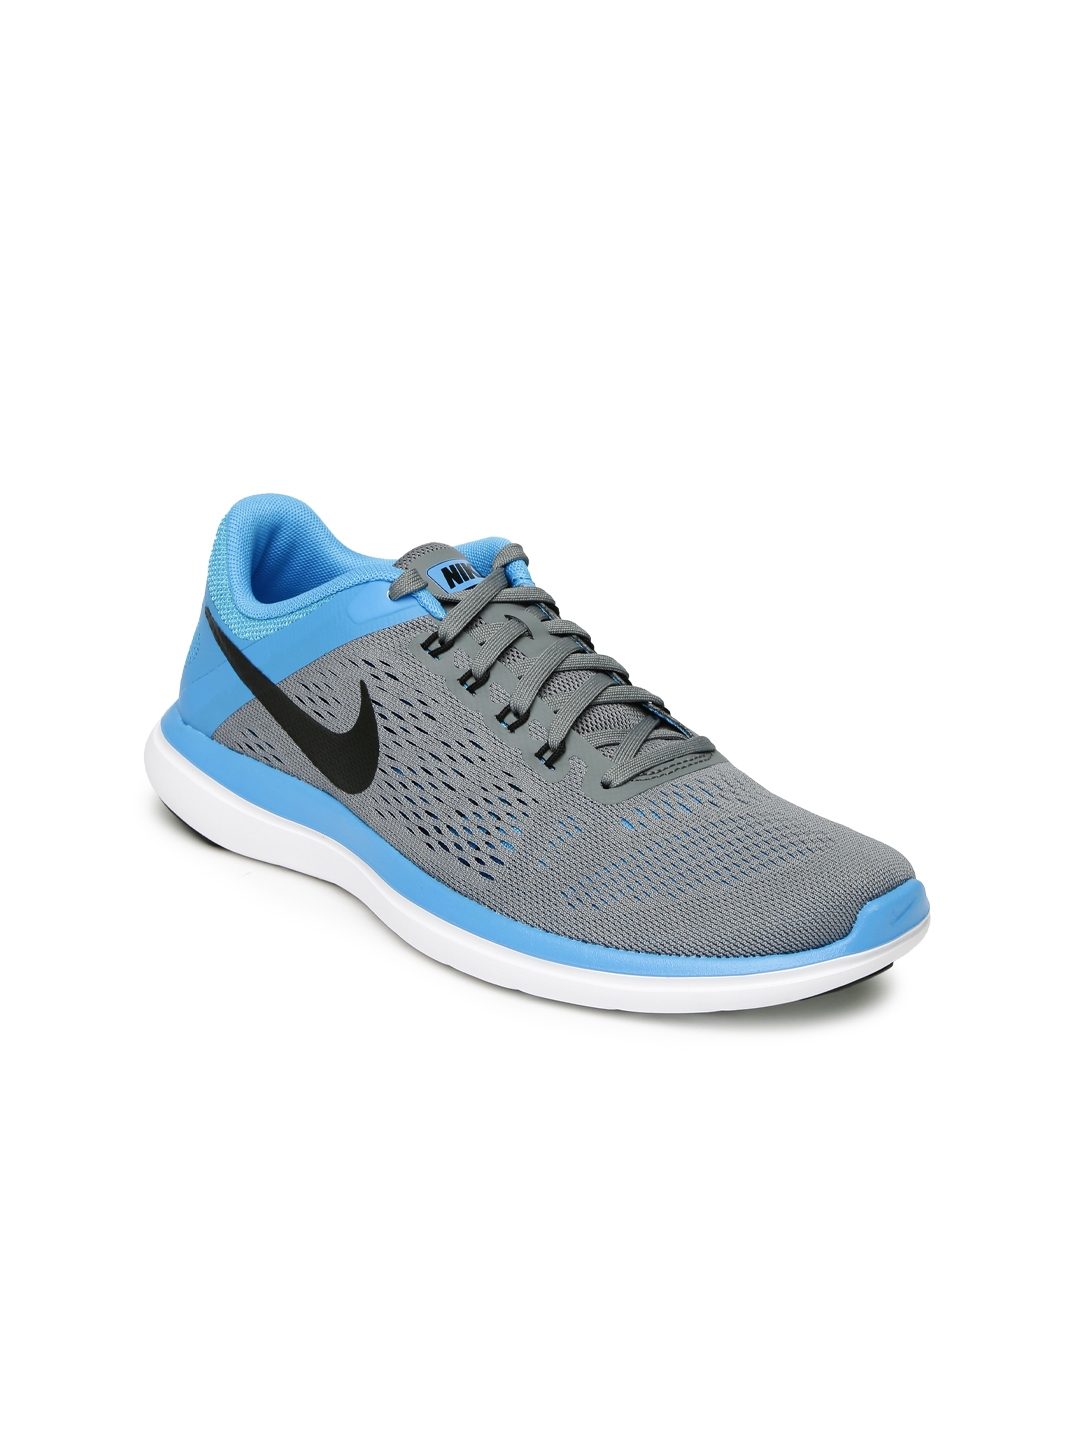 Buy Nike Women Grey & Blue Flex RN Running Shoes - Sports Shoes for ...